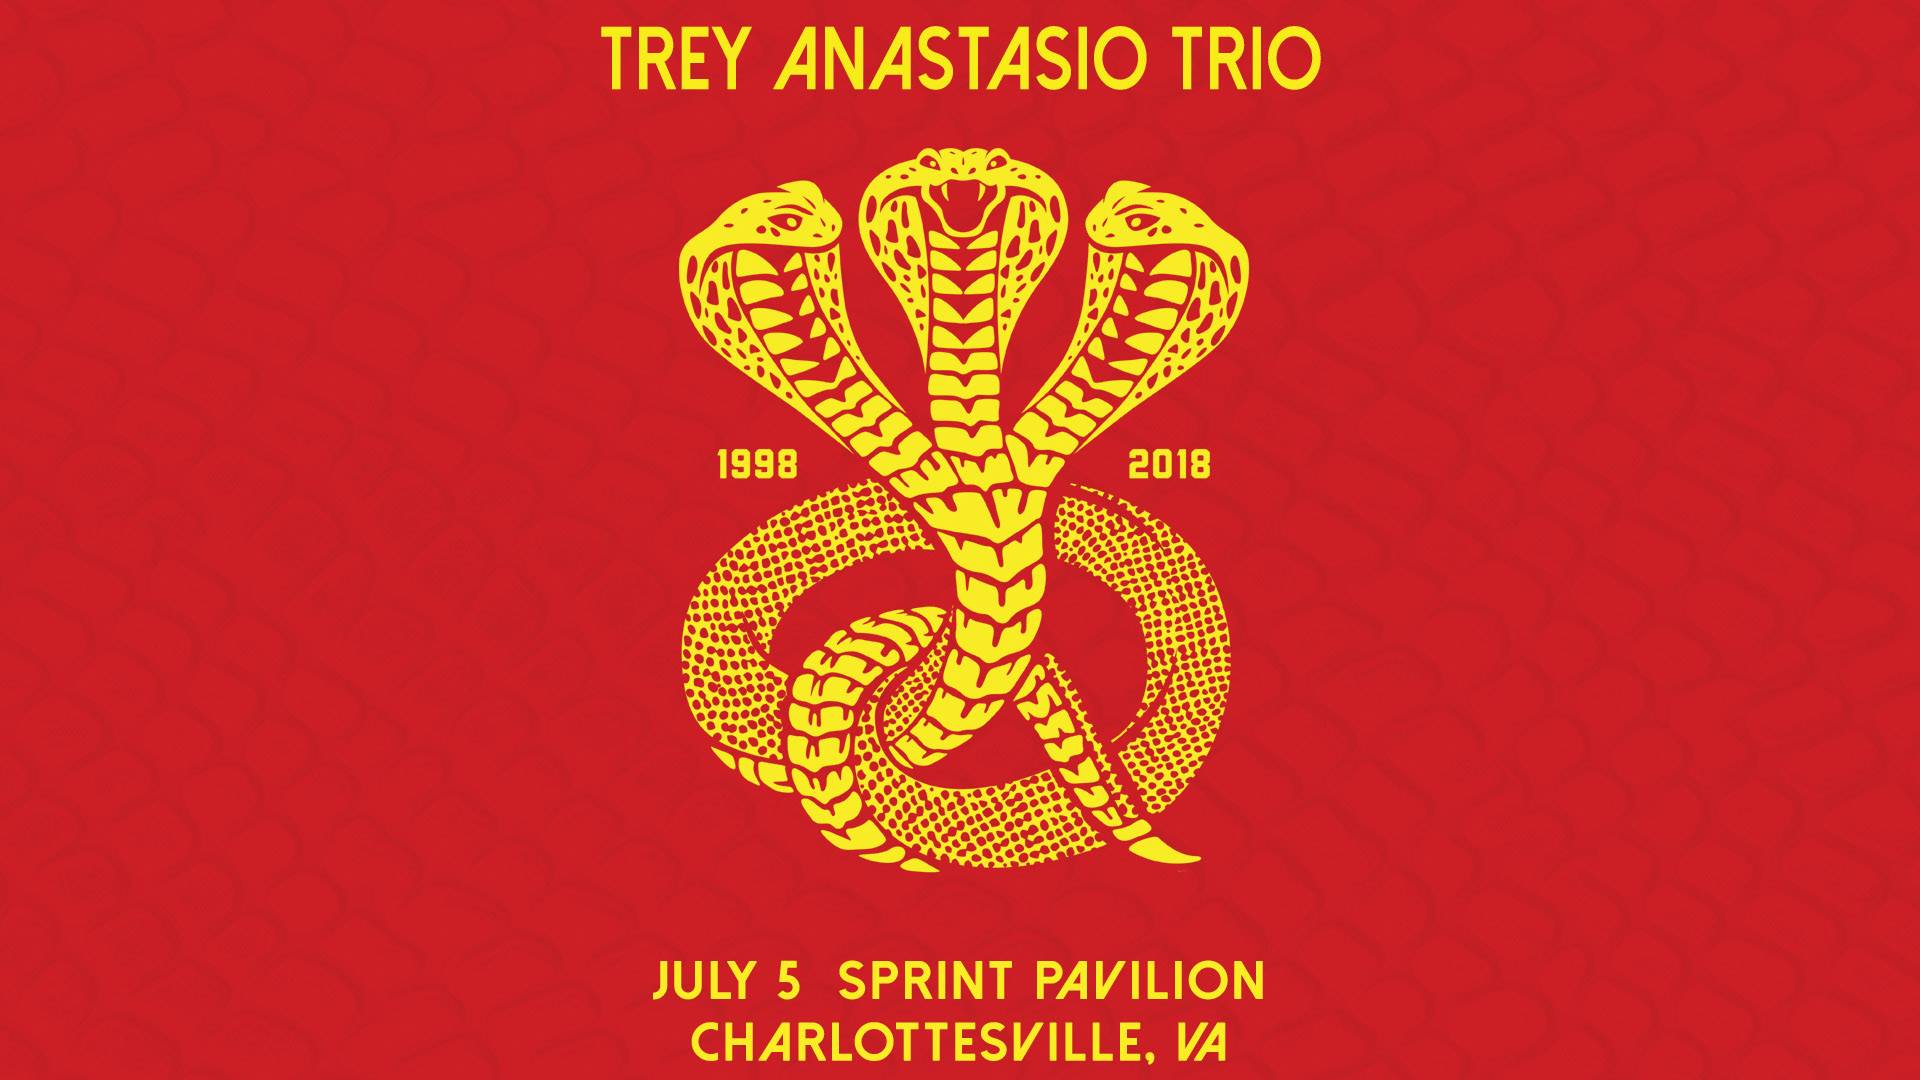 SETLIST Trey Anastasio Trio (+ Ray!) Sprint Pavilion